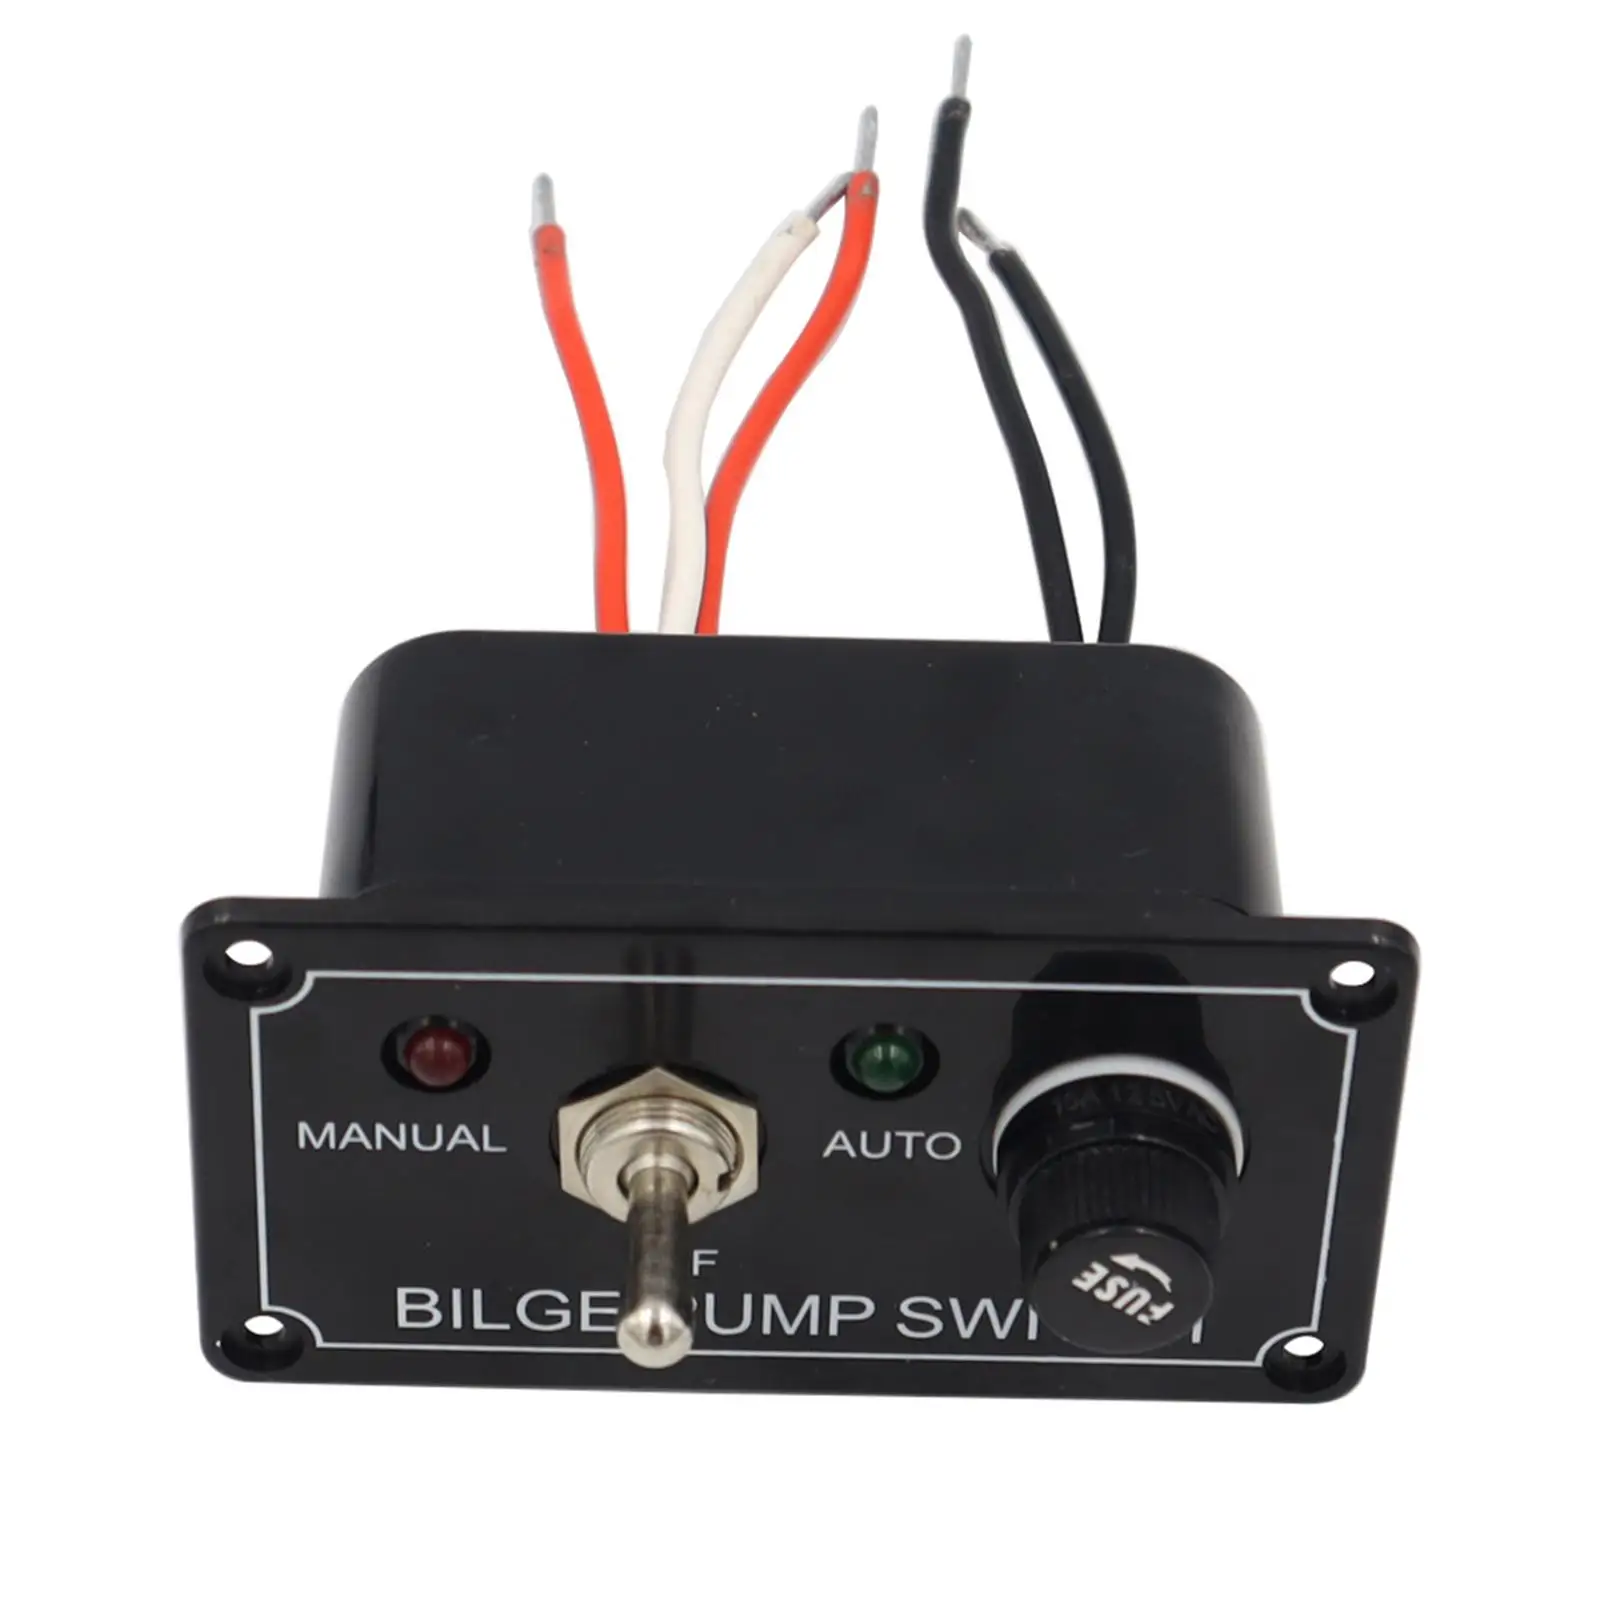 Rocker Toggle Bilge Pump Switch Panel, Fuse LED Indicator, for Marine Cars Yachts Parts.